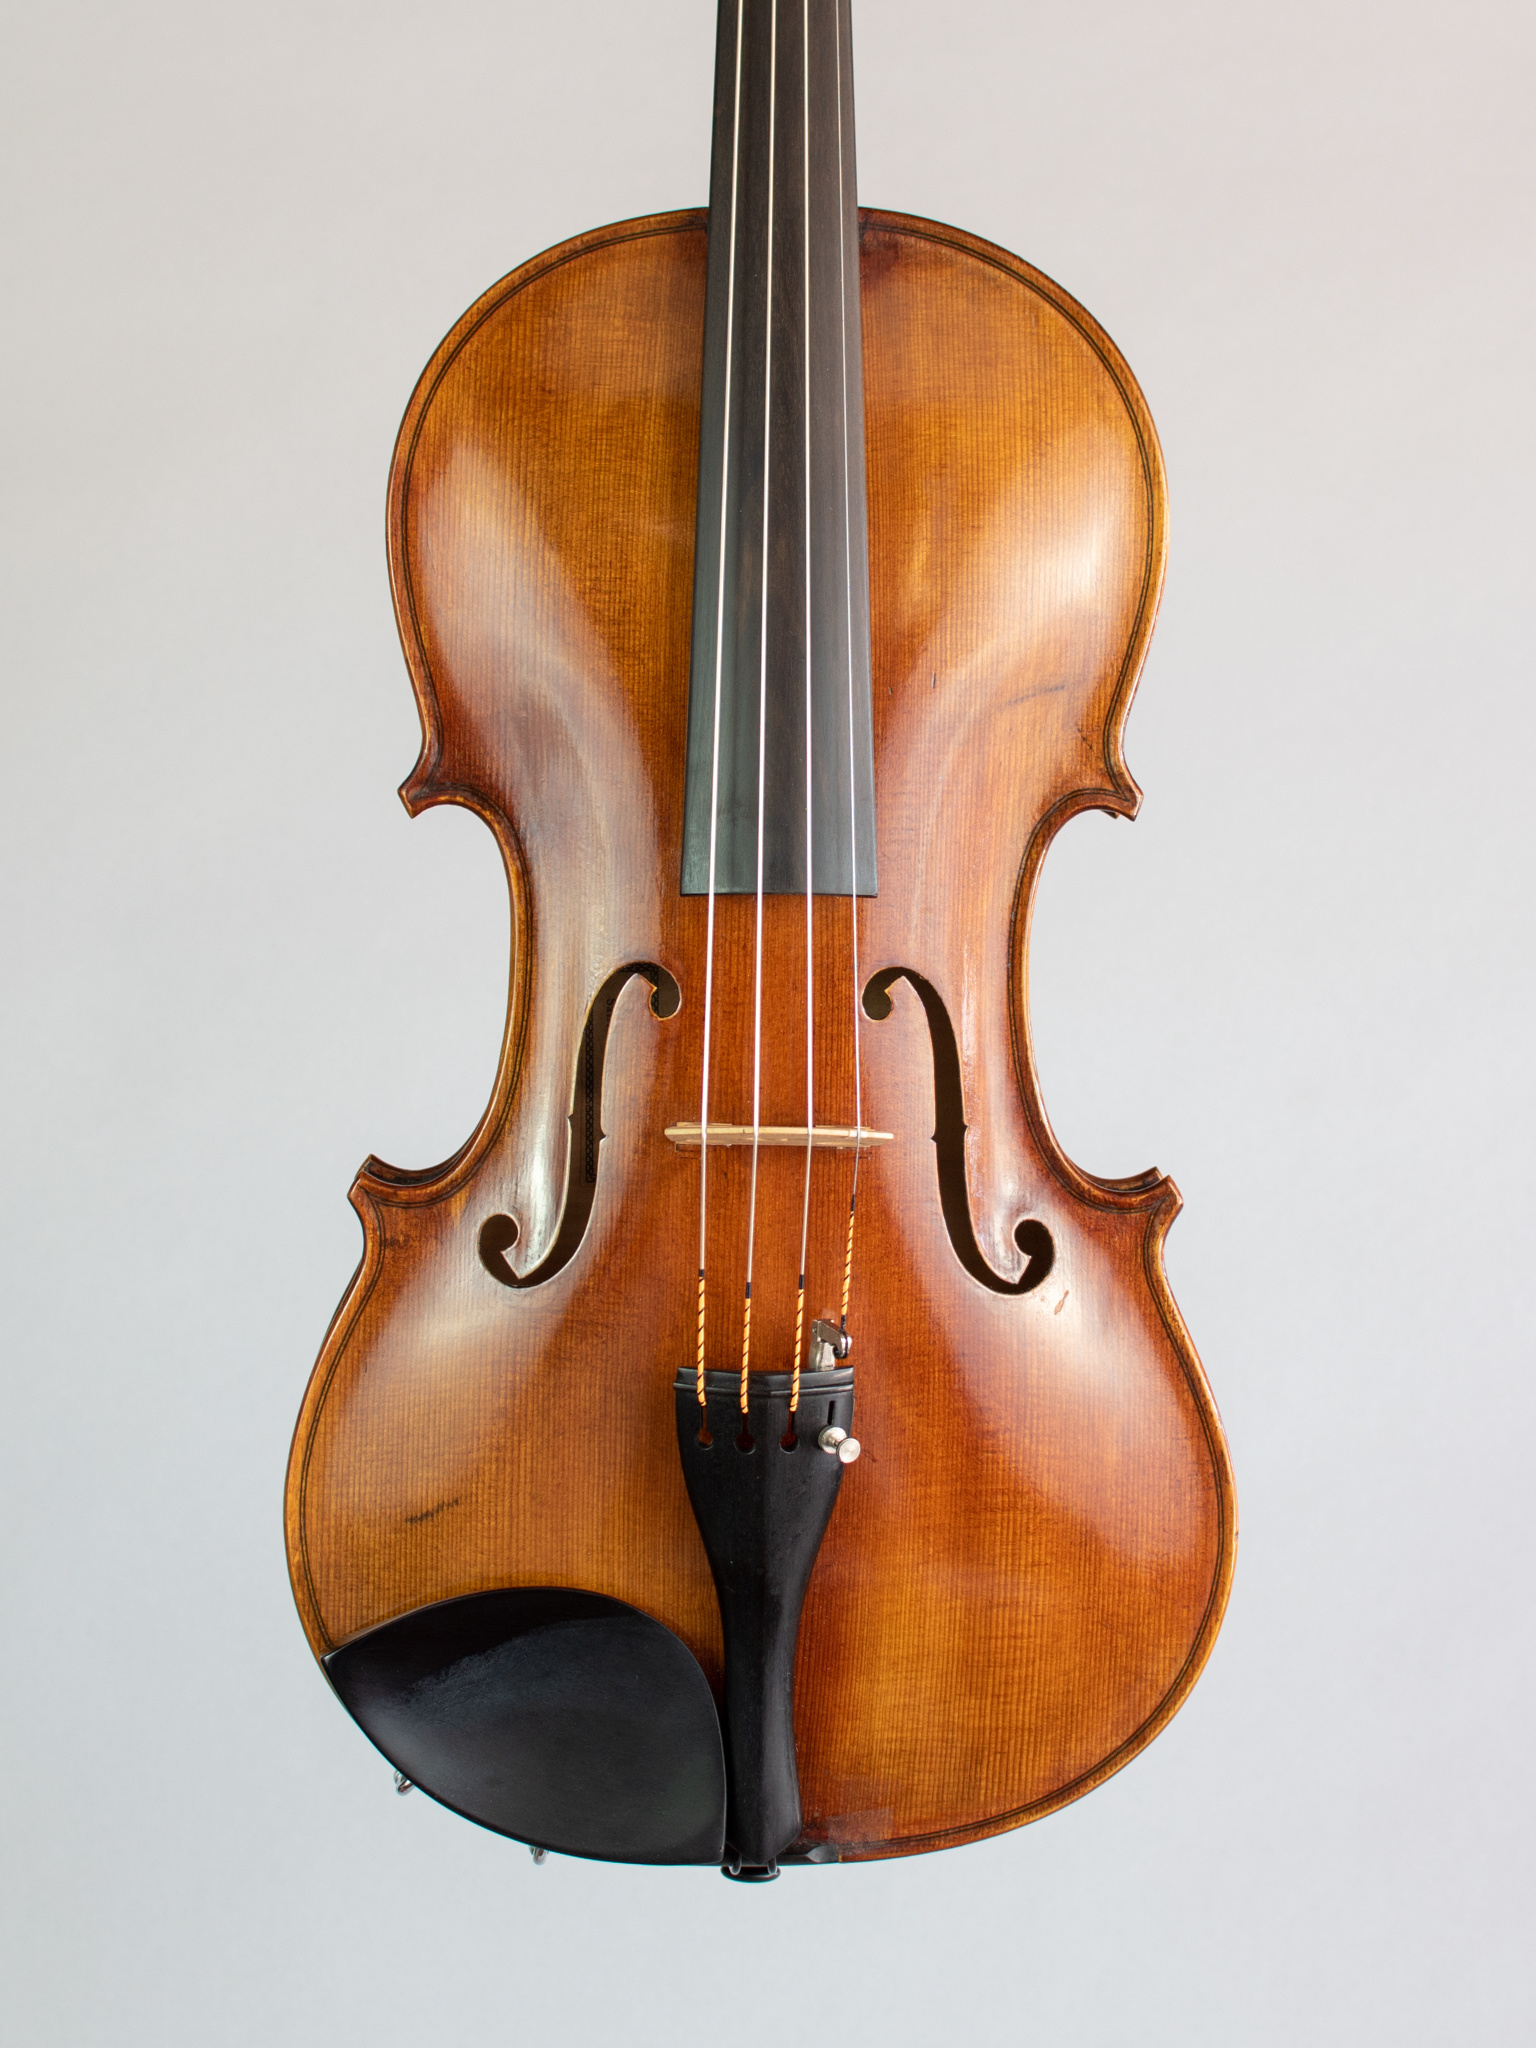 James Wimmer 16" viola, 1992, Santa Barbara, California